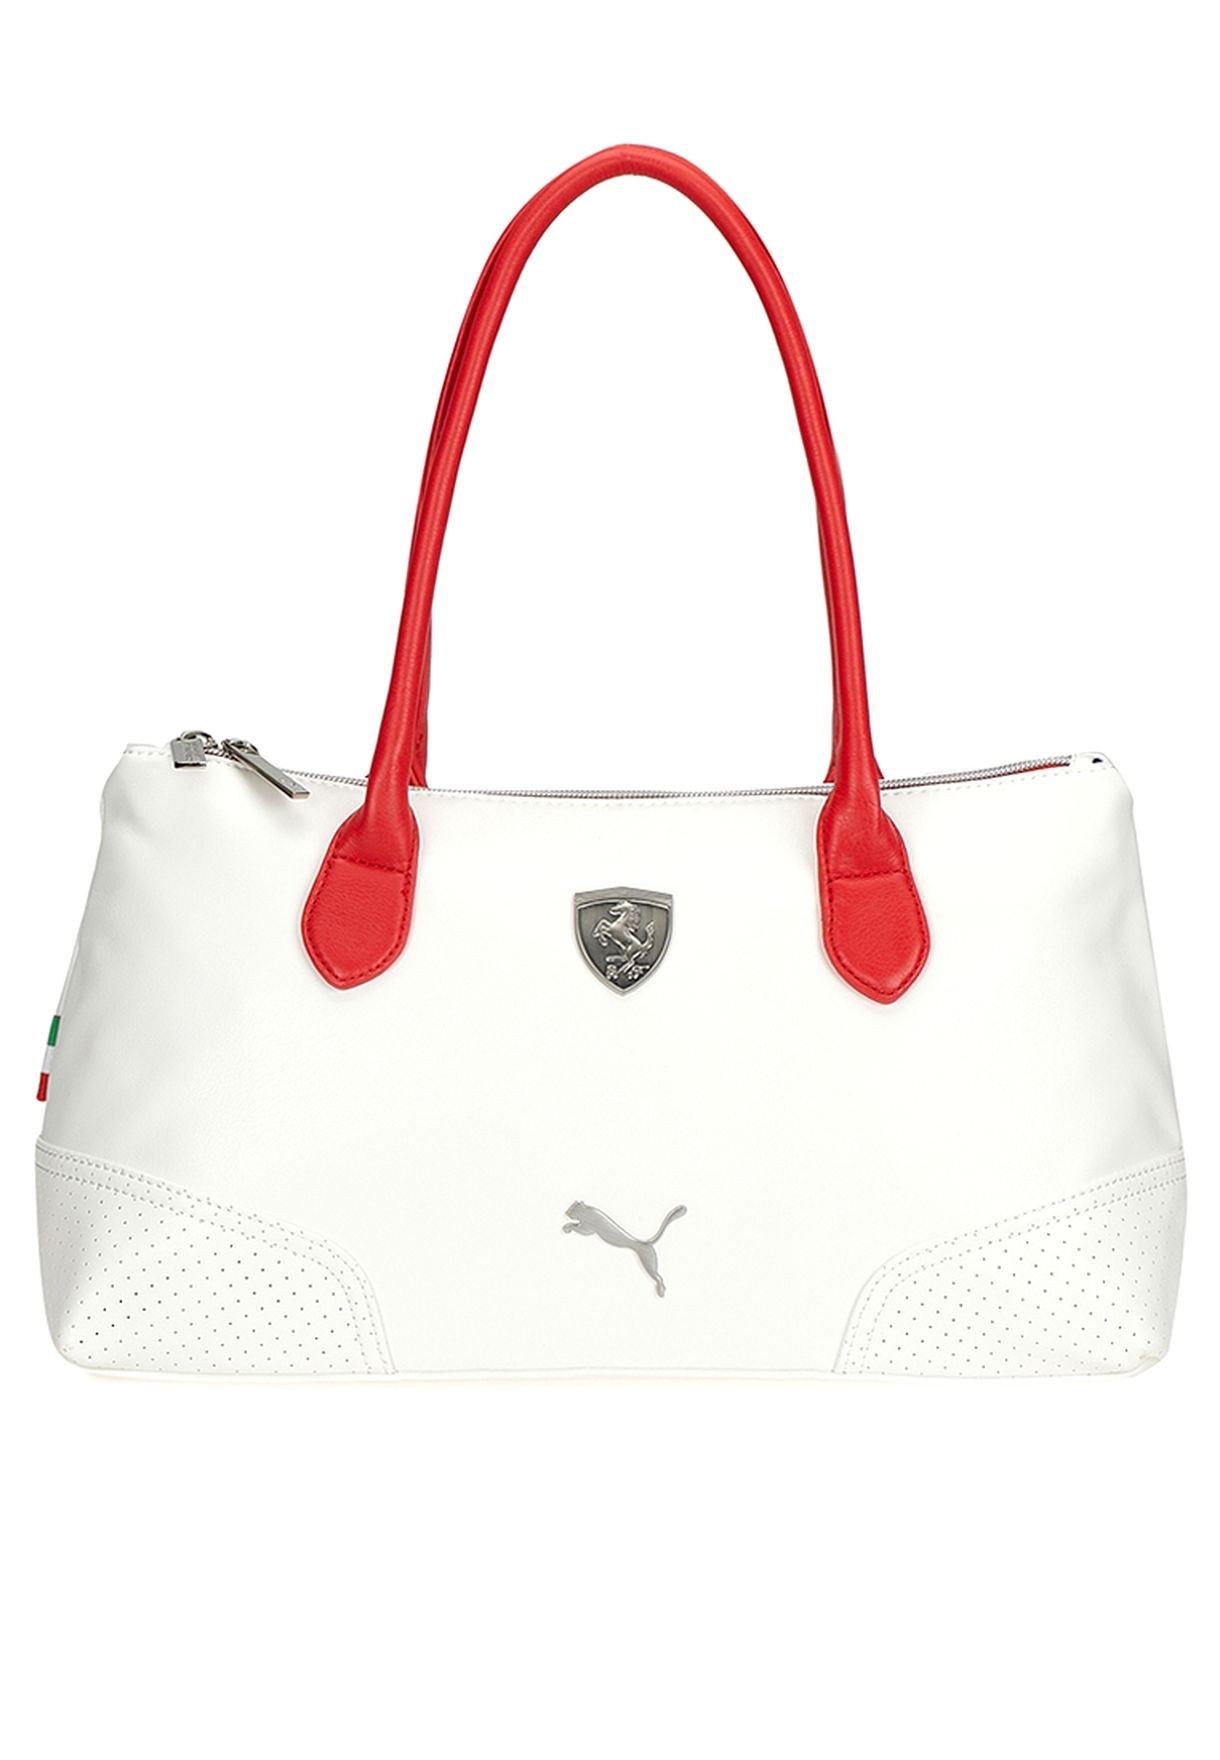 PUMA Bags & Handbags for Women sale - discounted price | FASHIOLA INDIA